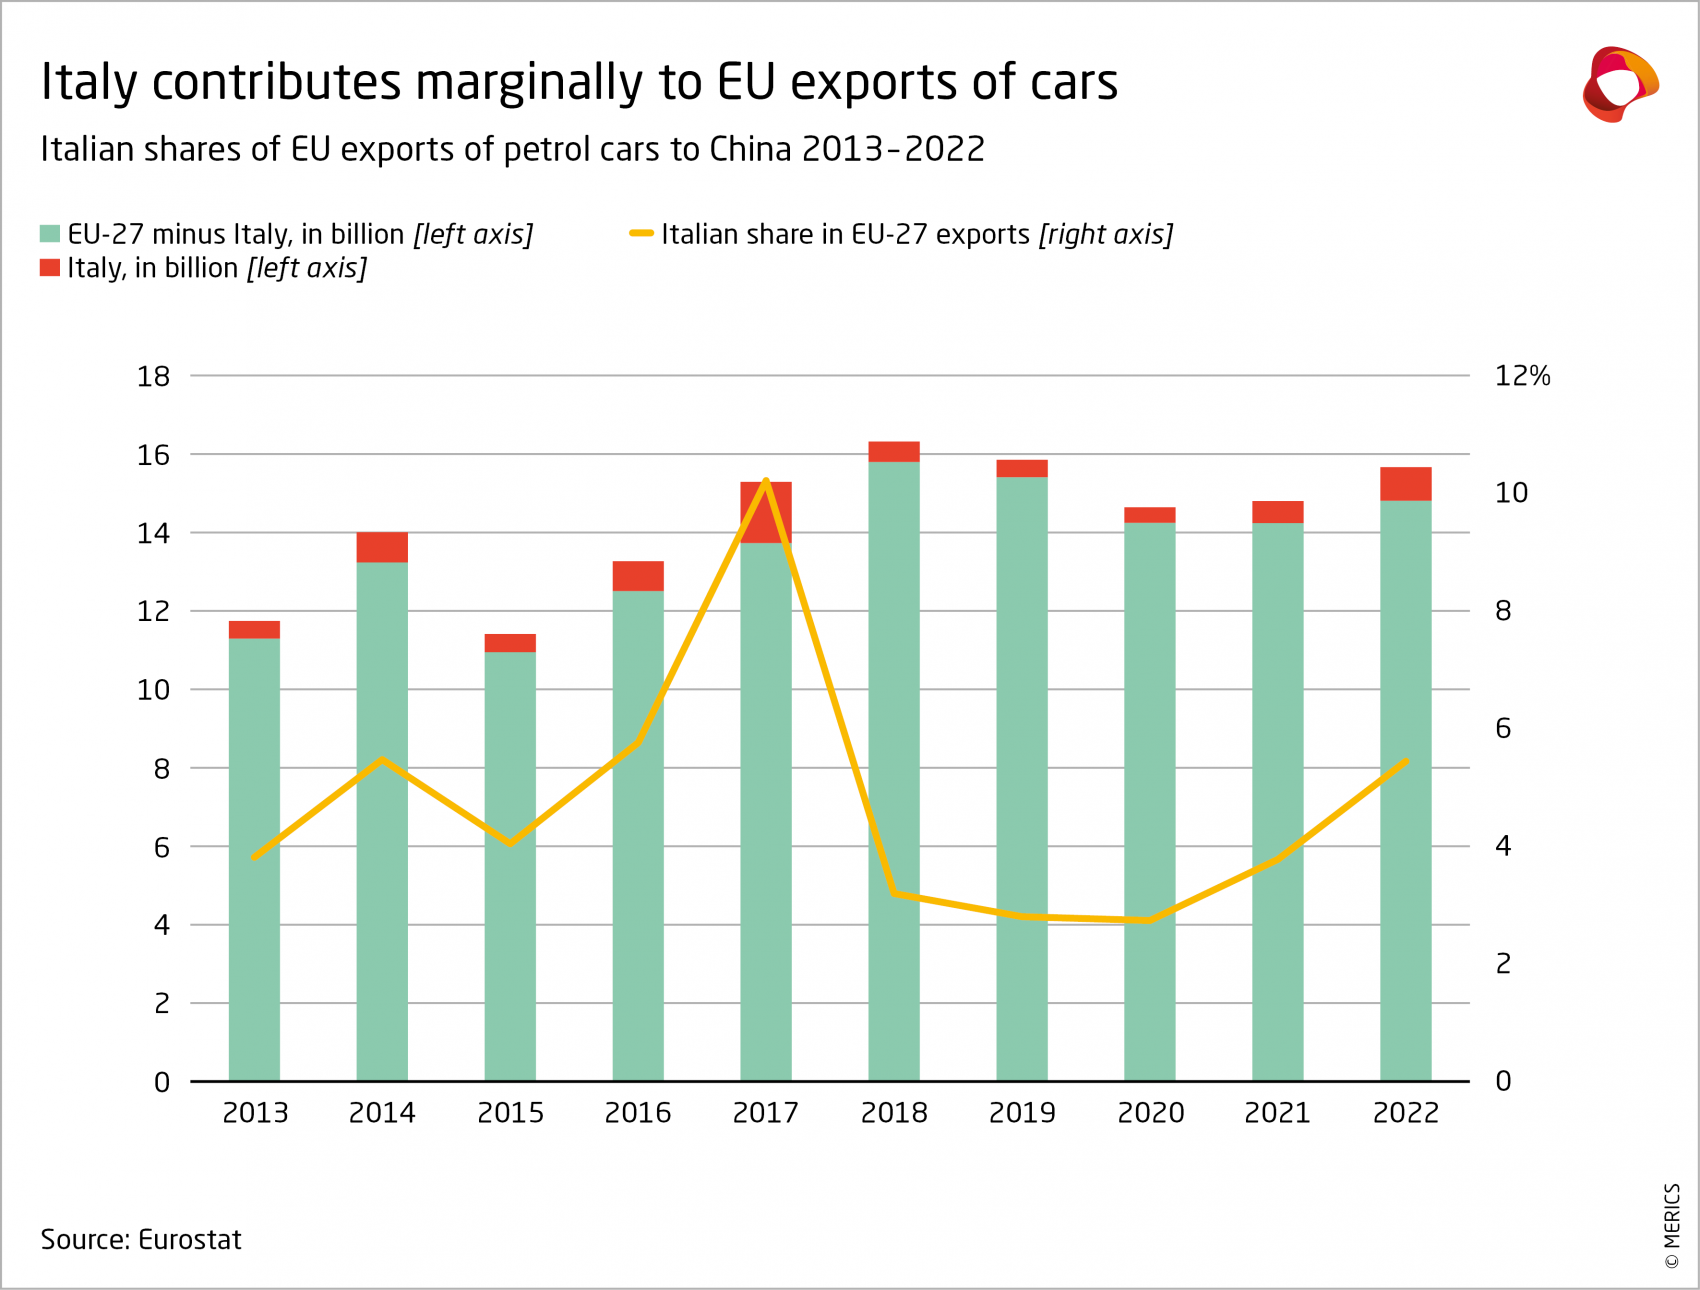 Italian shares of EU exports of petrol cars to China, 2013-2022